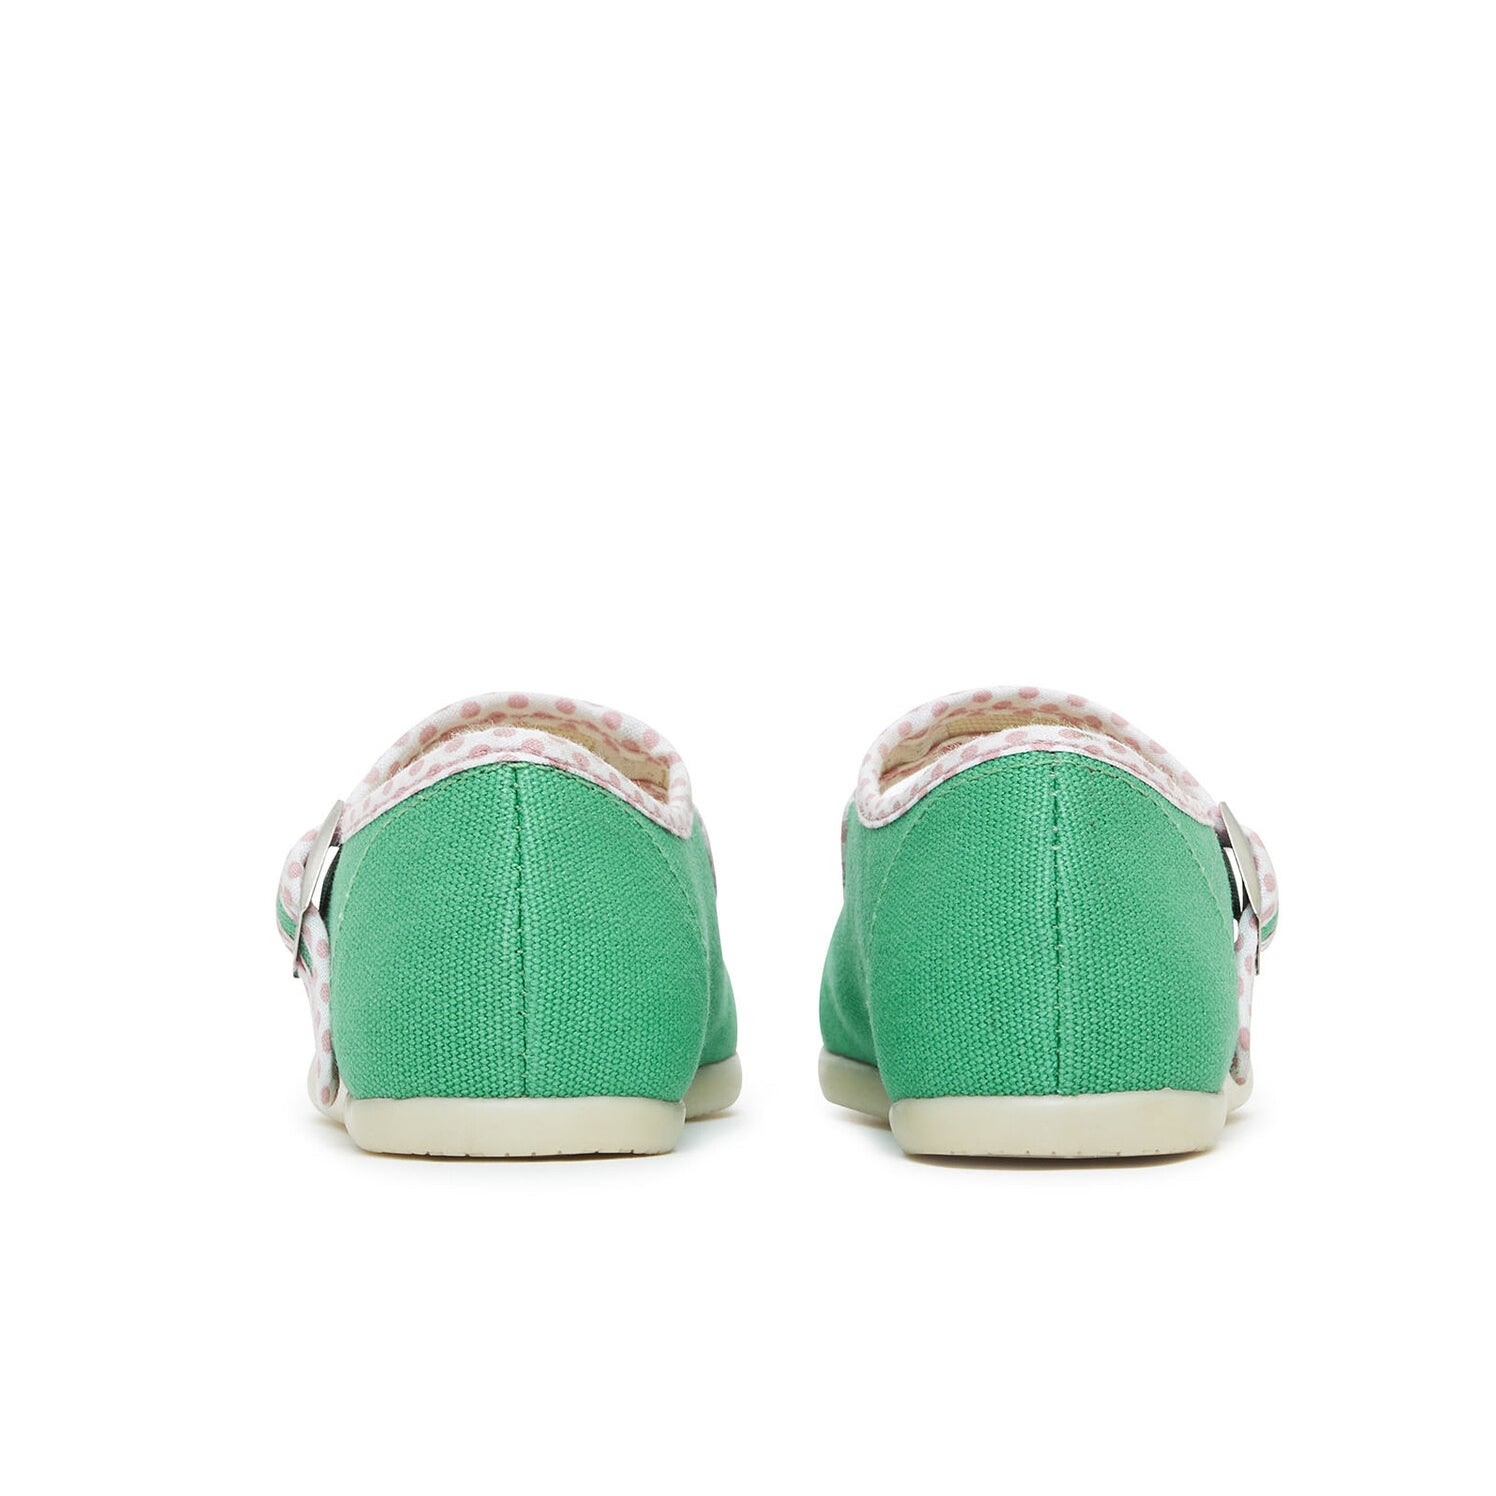 Girls Green Cotton Shoes